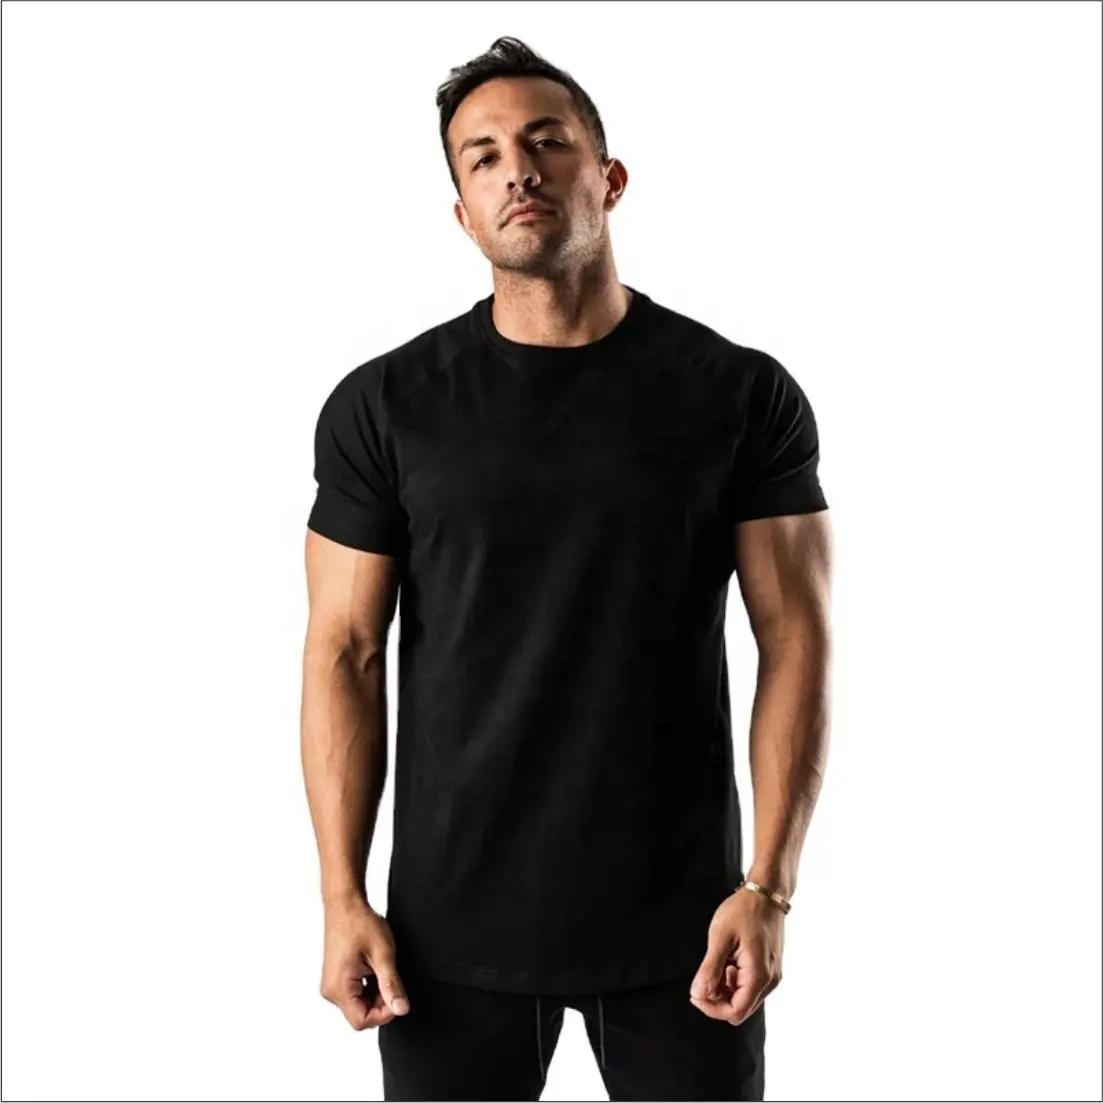 2022 Summer Cotton Men's T-Shirt Short-Sleeve Man T-Shirt Short Sleeve Pure Color s Clothing T-Shirts Tops Tee Men's Clothing